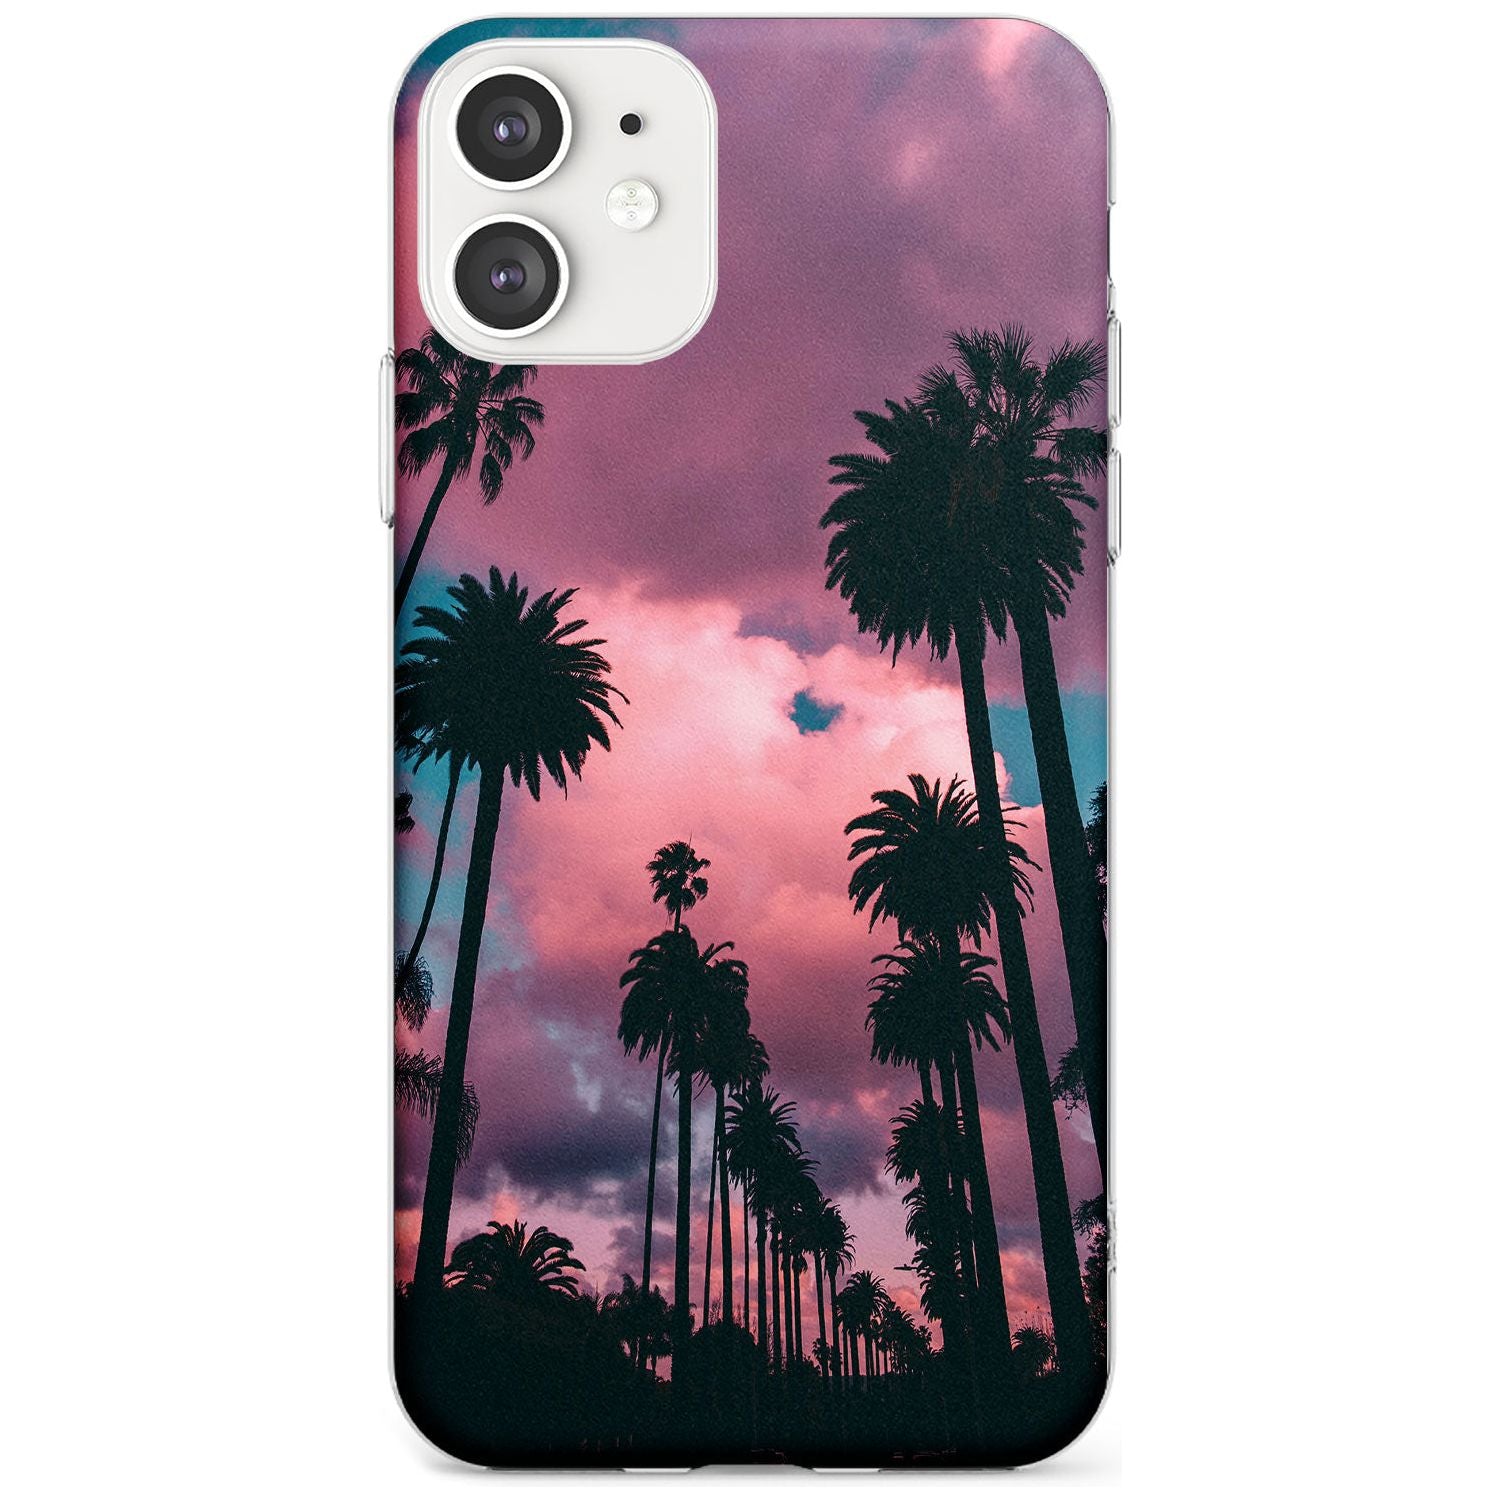 Palm Tree Sunset Photograph Slim TPU Phone Case for iPhone 11